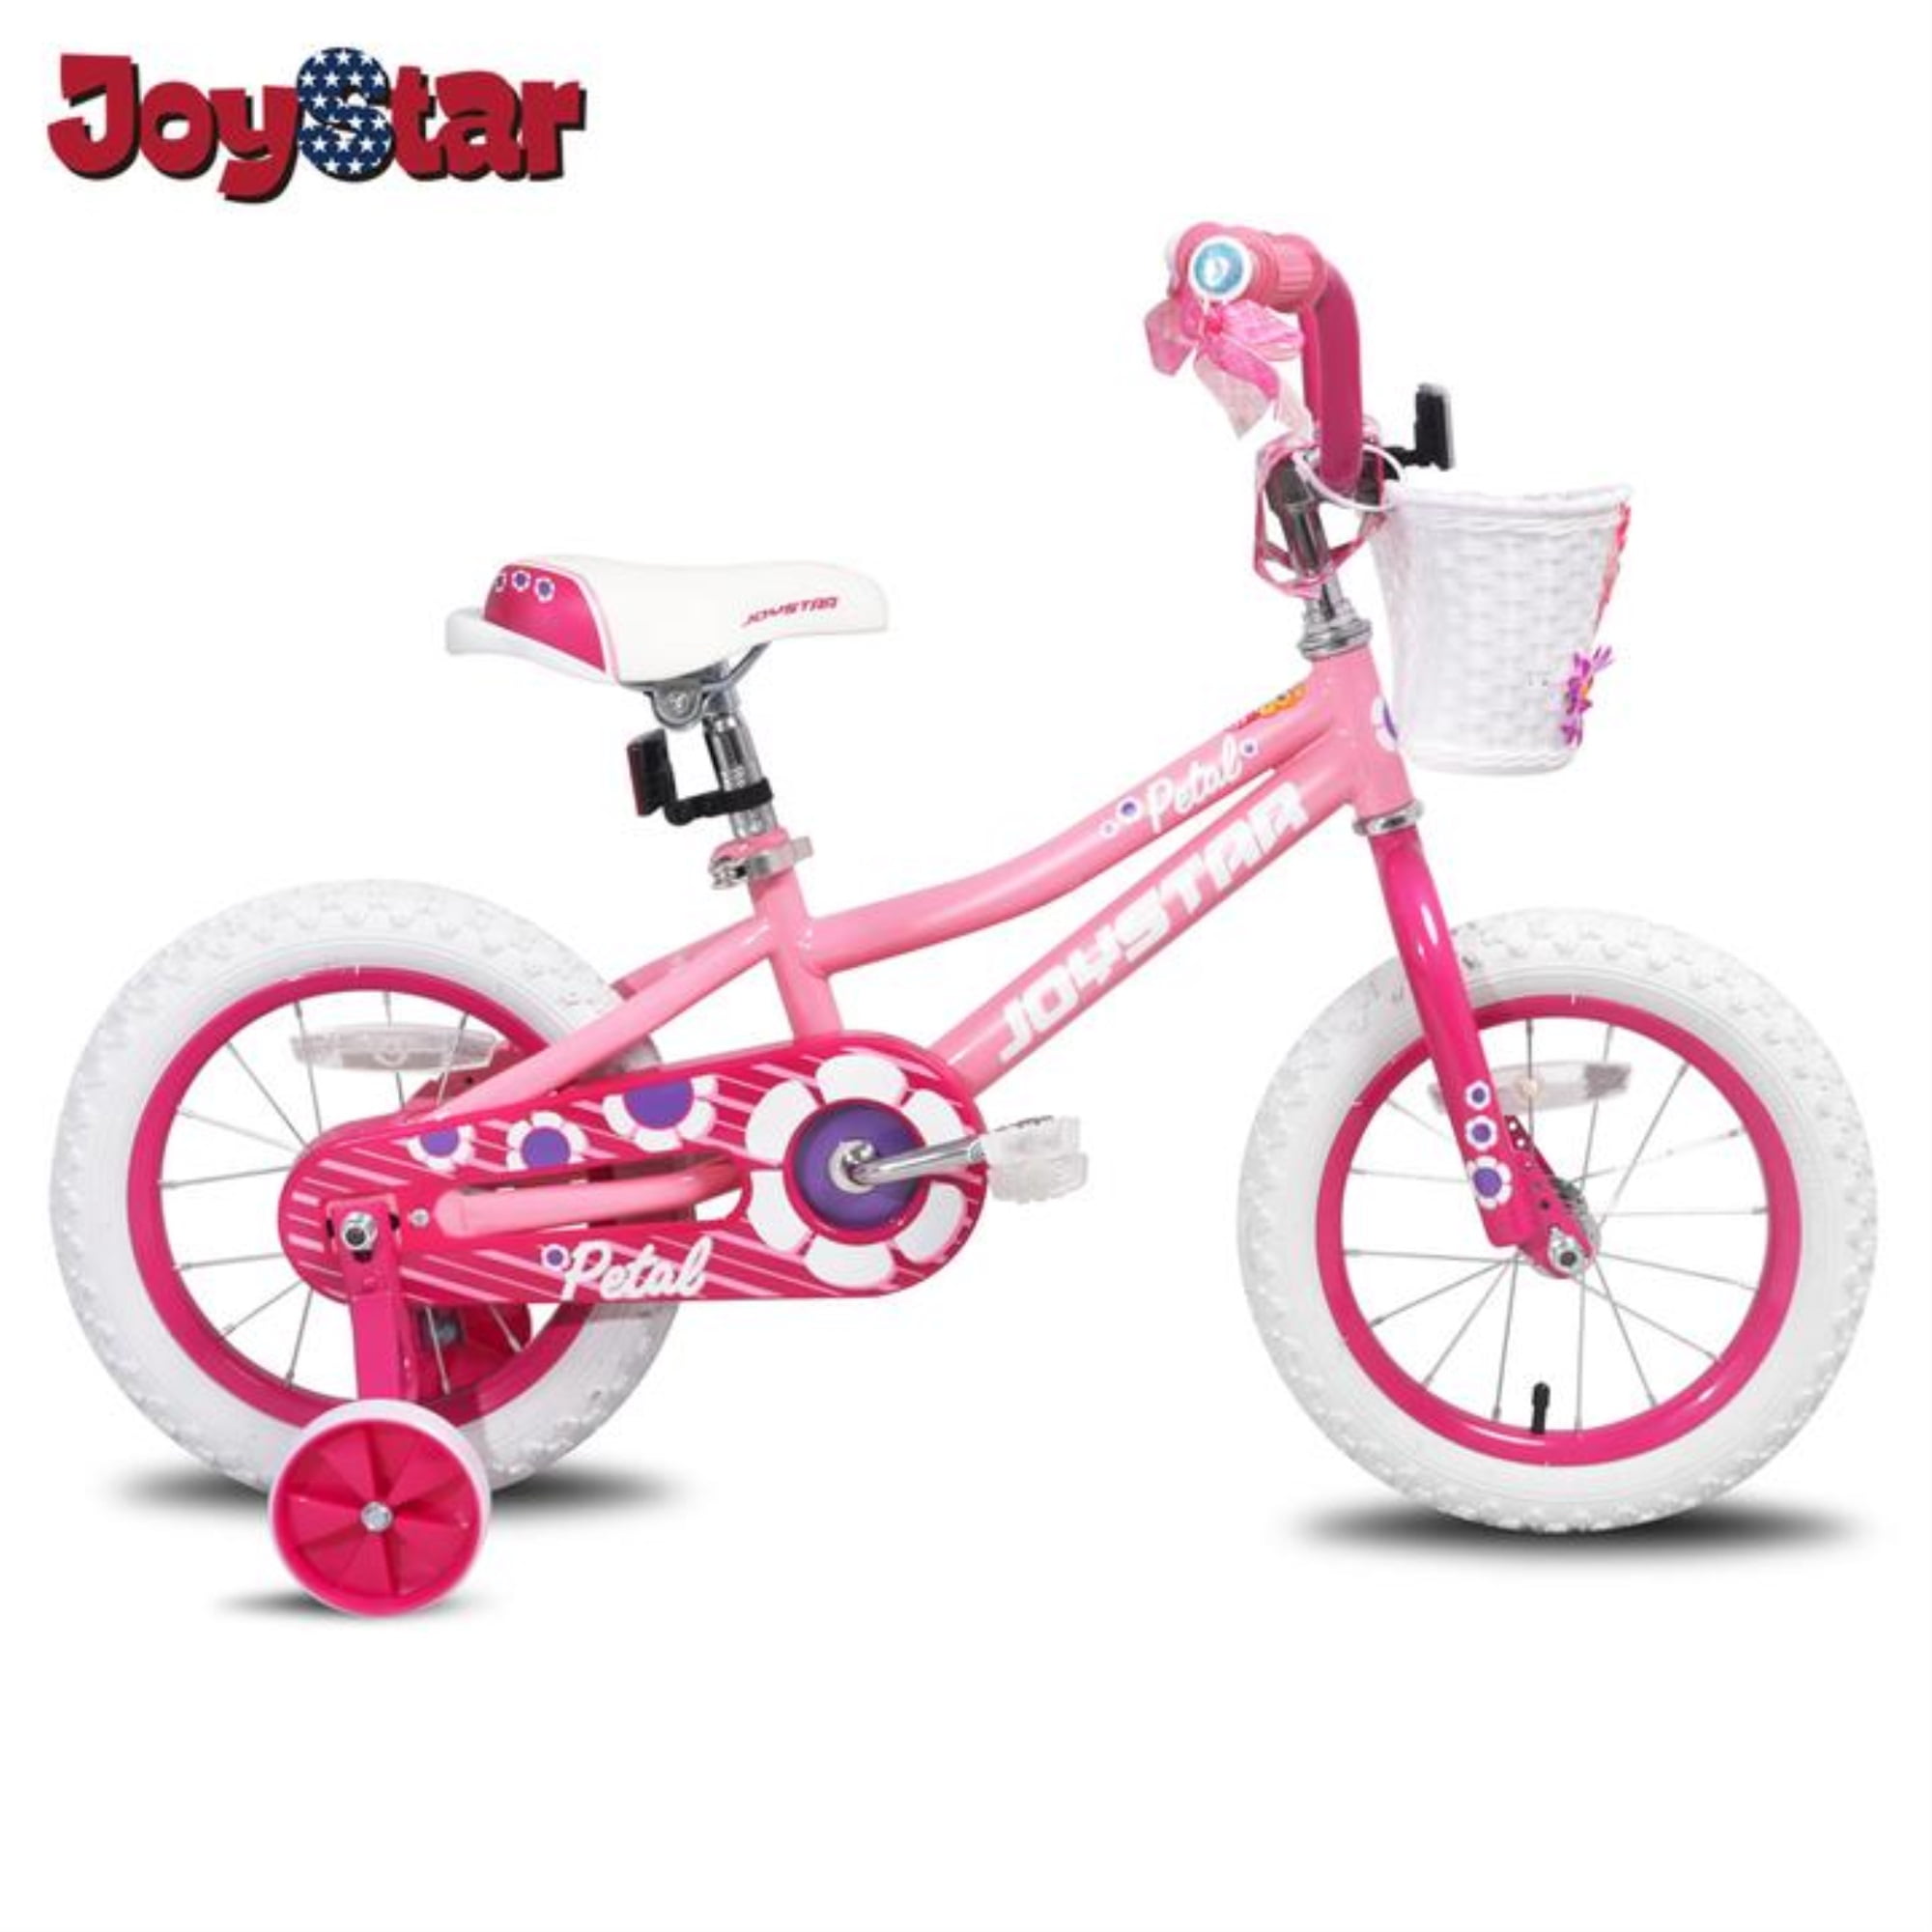 16-inch wheel girls pink training wheels Schwinn Bloom kids bike banana sea 